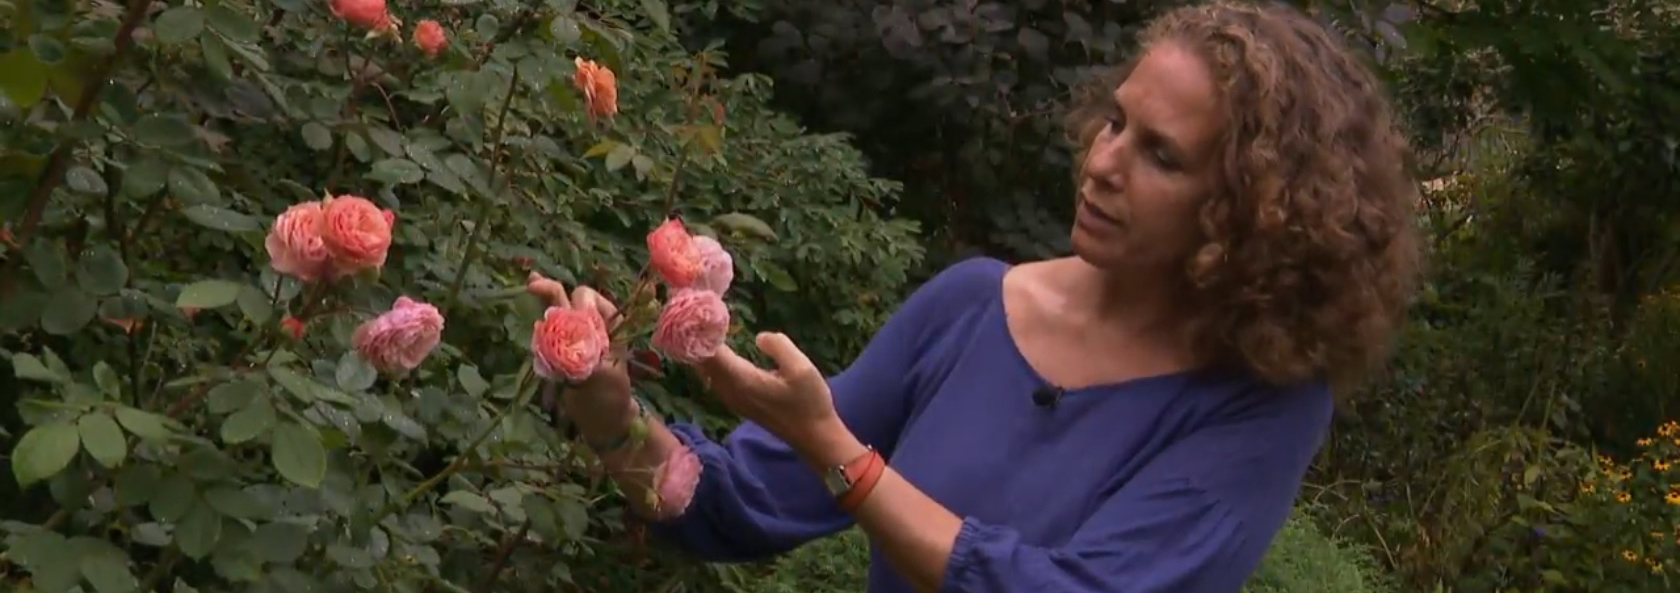 RTBF interview on the Nuancier du jardinier